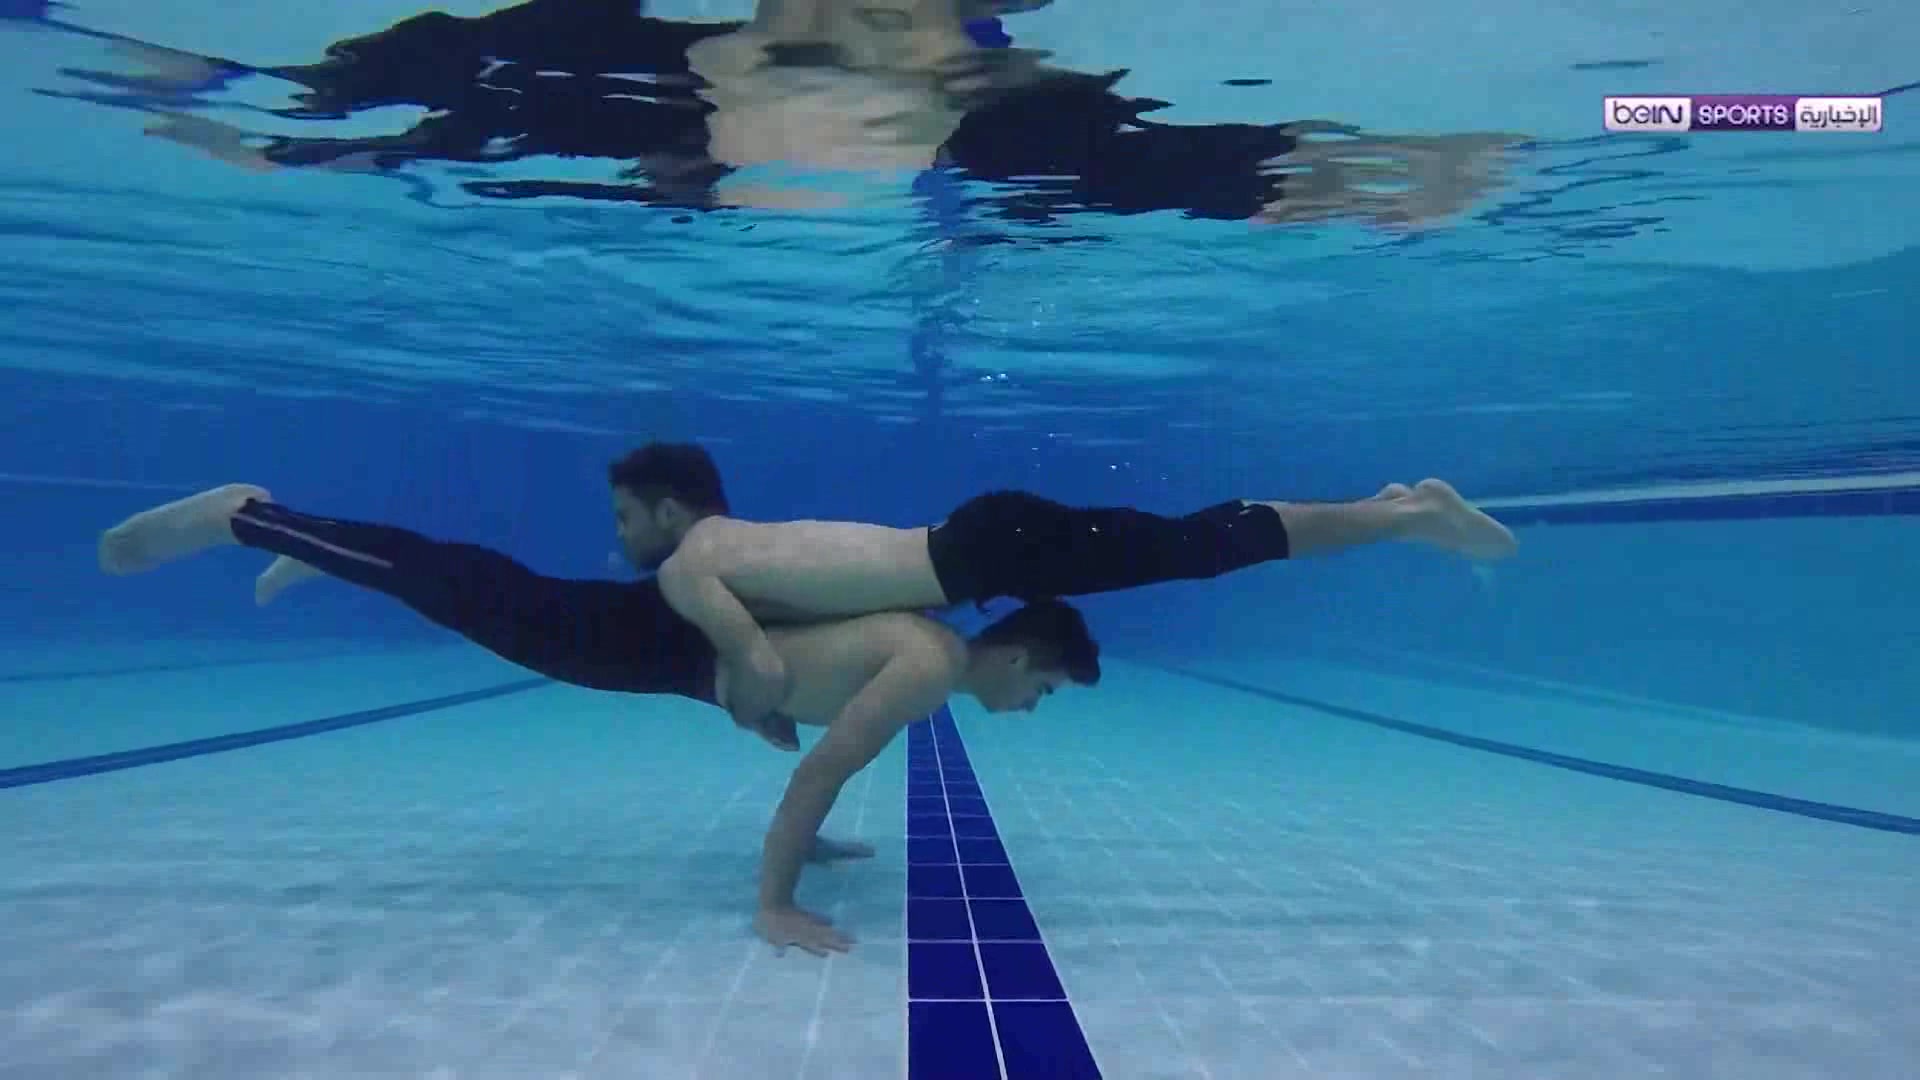 Barefaced arabs exercising underwater in pool, extended